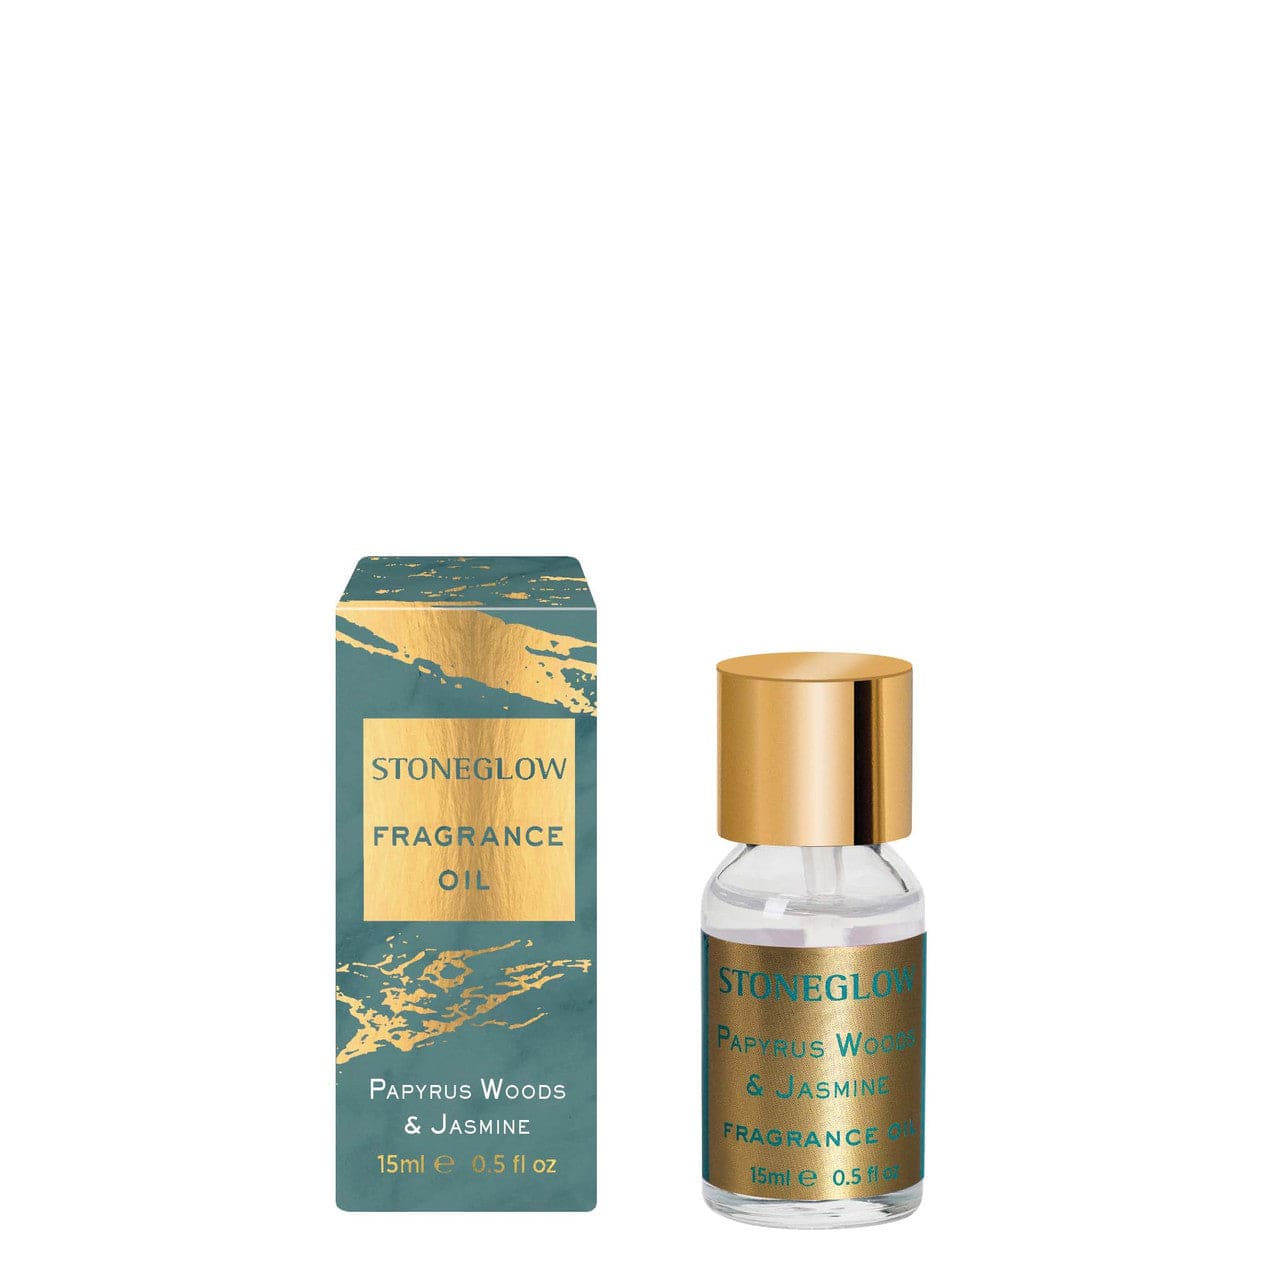 Stoneglow Luna - Papyrus Woods & Jasmine - Fragrance Oil 15ml